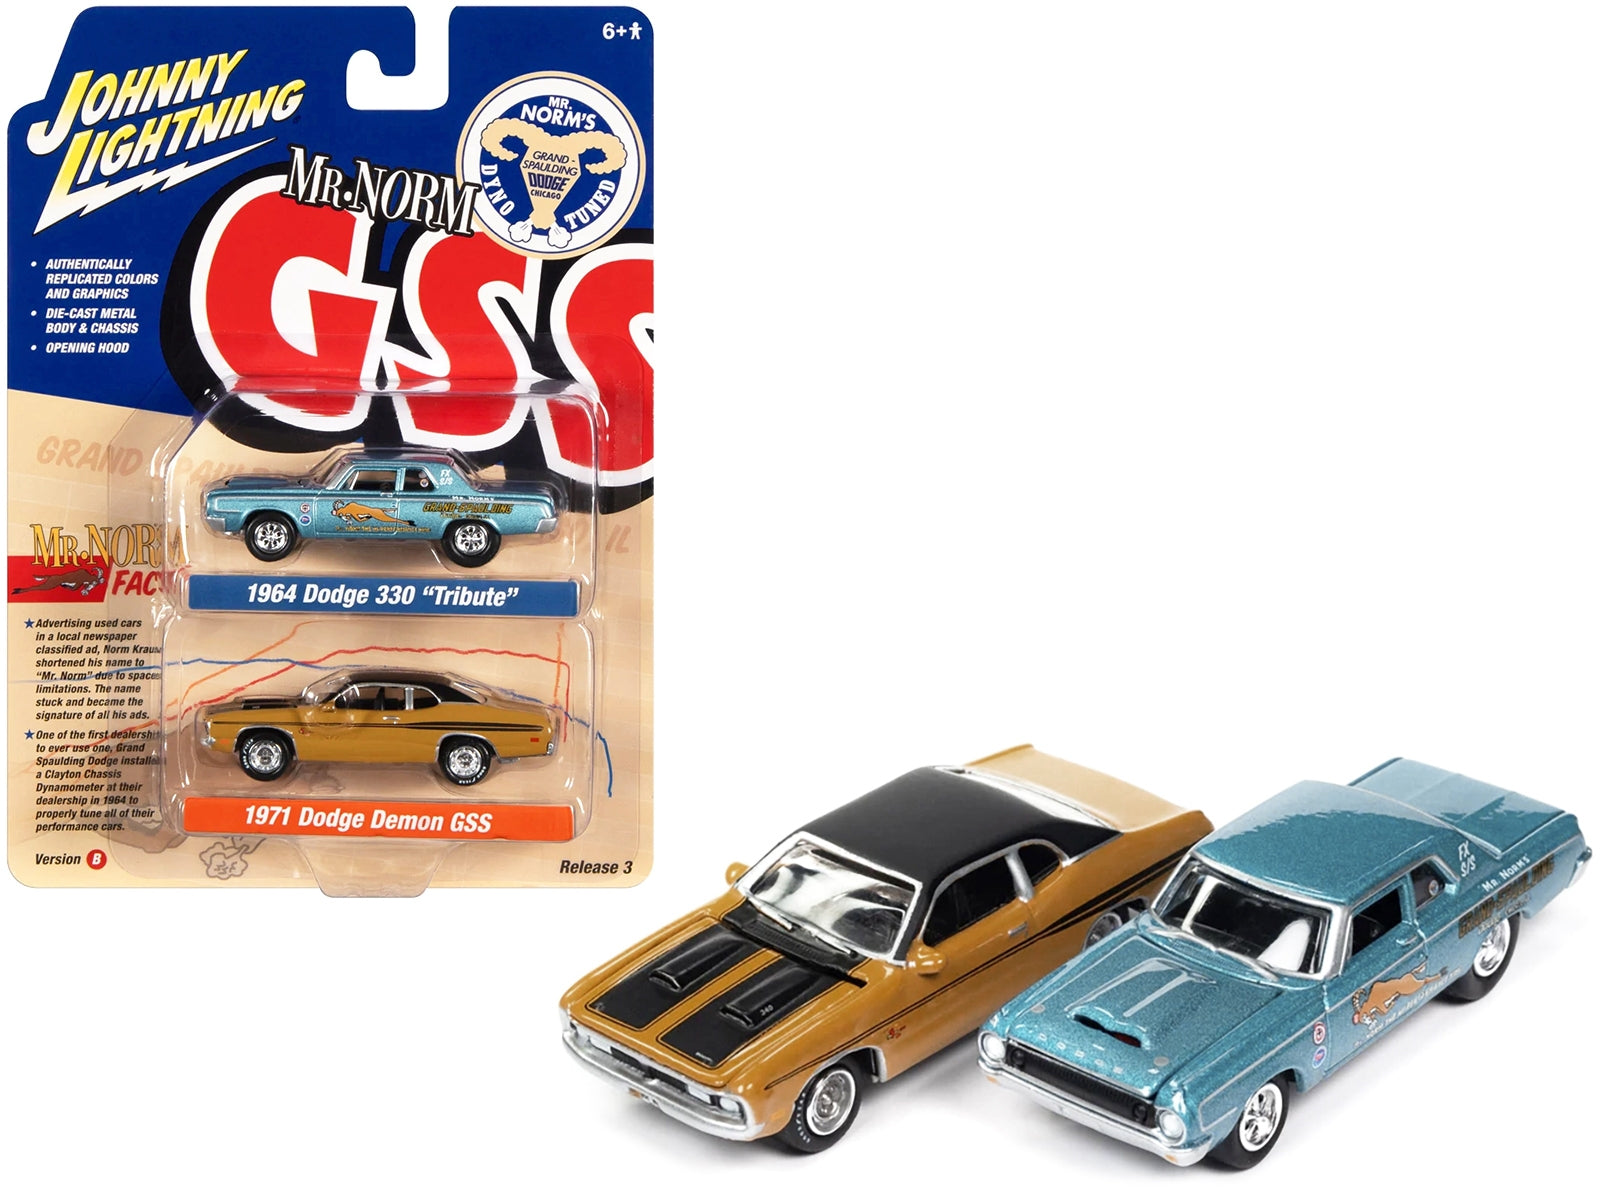 1964 Dodge 330 "Mr. Norm - Grand Spaulding Dodge" Blue Metallic and 1971 Dodge Demon GSS Butterscotch Orange with Black Top